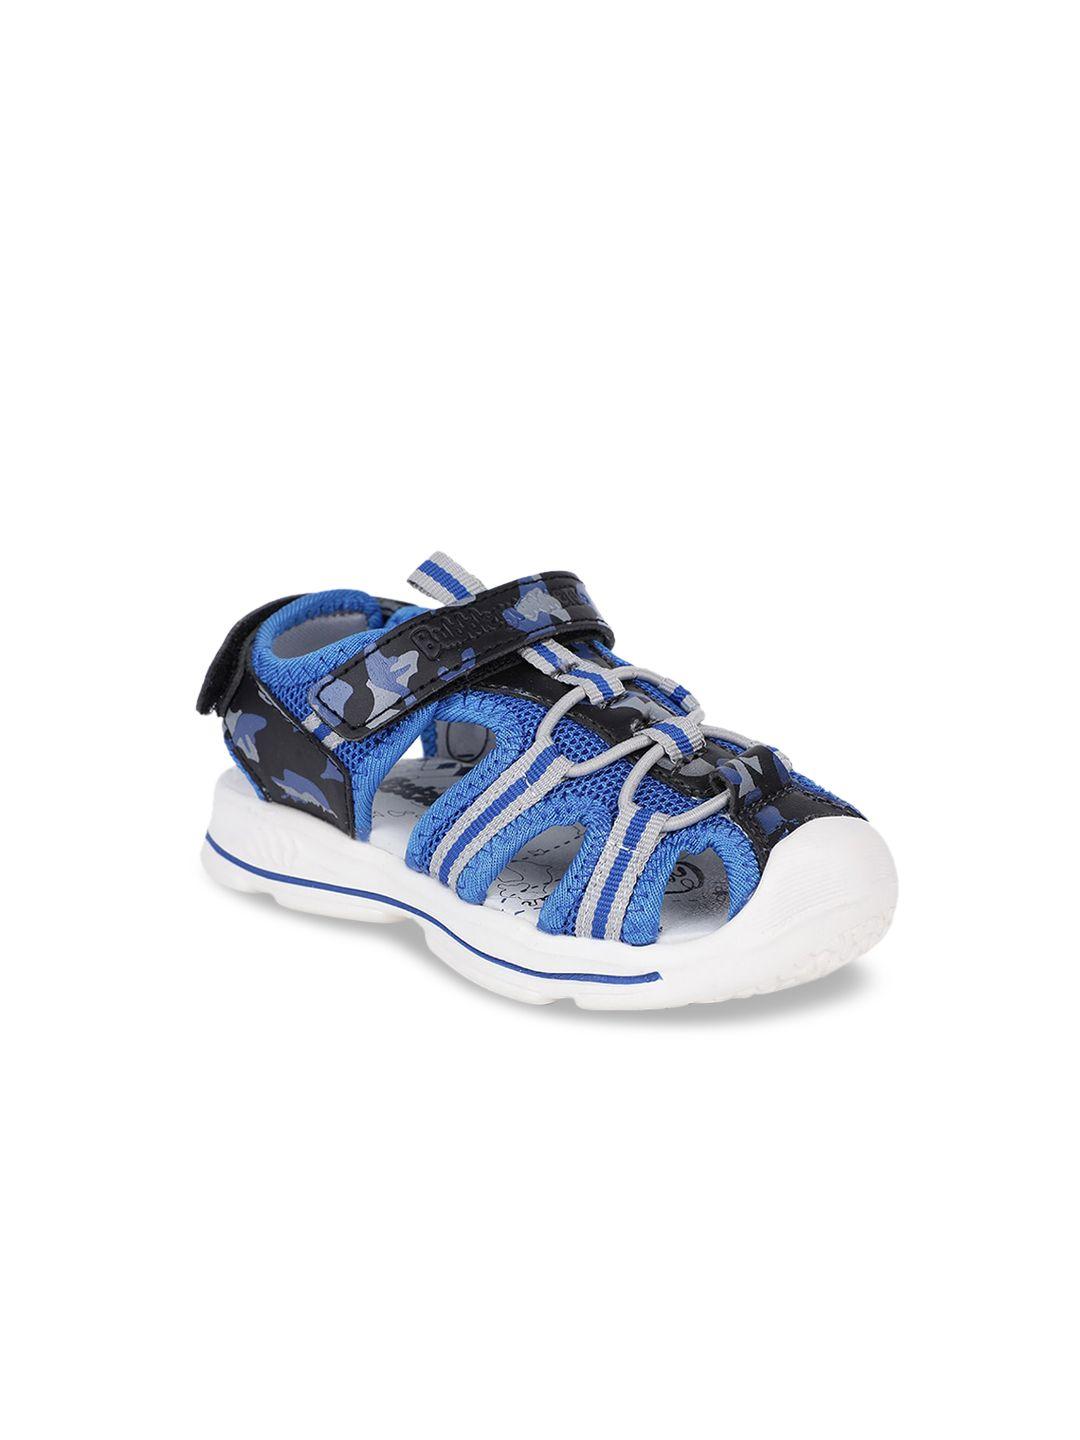 bubblegummers boys blue & black sports sandal